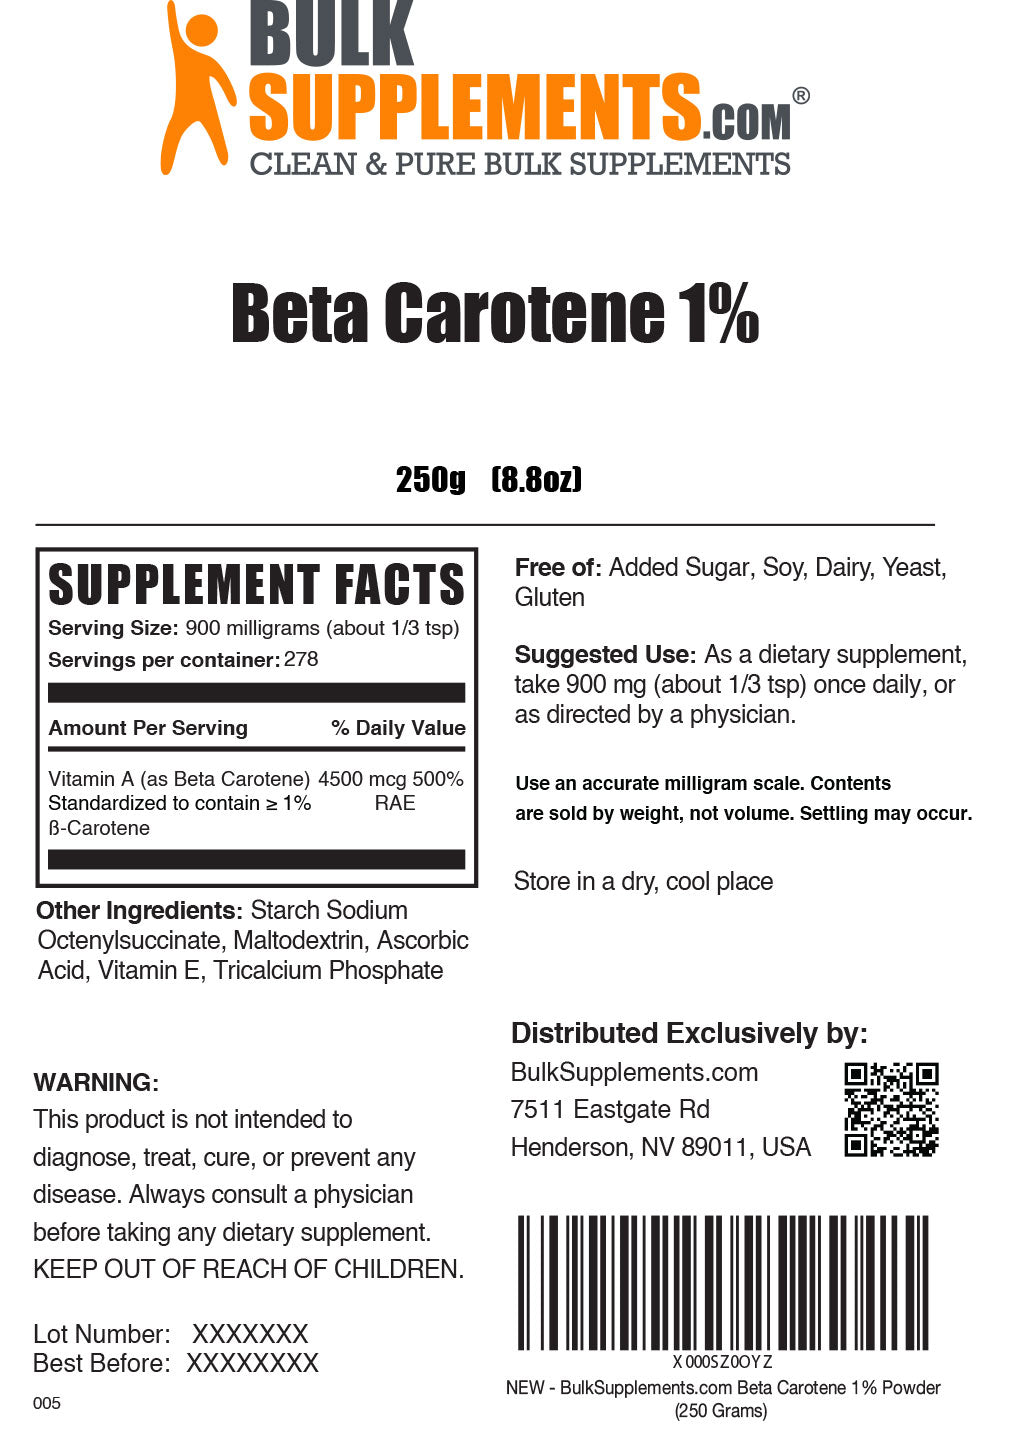 Beta Carotene powder label 250g